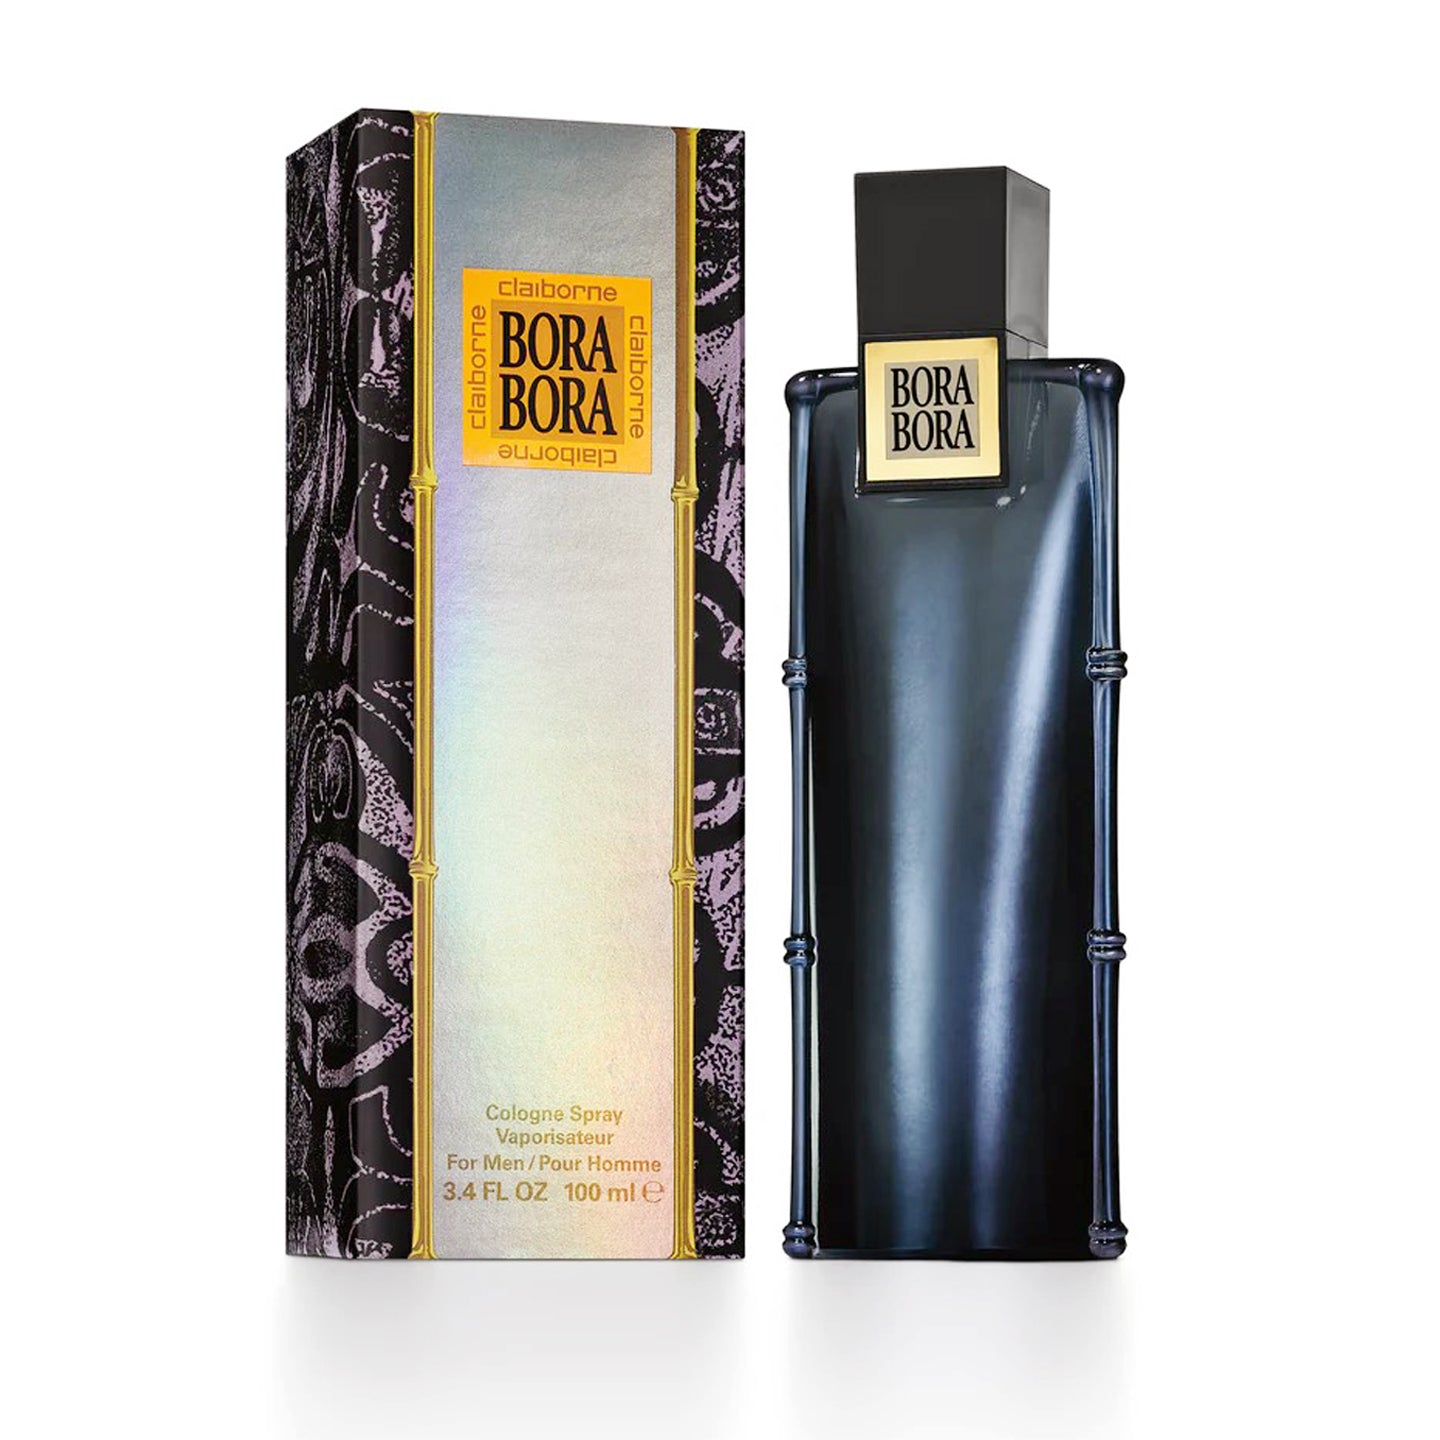 Liz Claiborne Bora Bora Eau de Cologne Spray 100 ml for Men